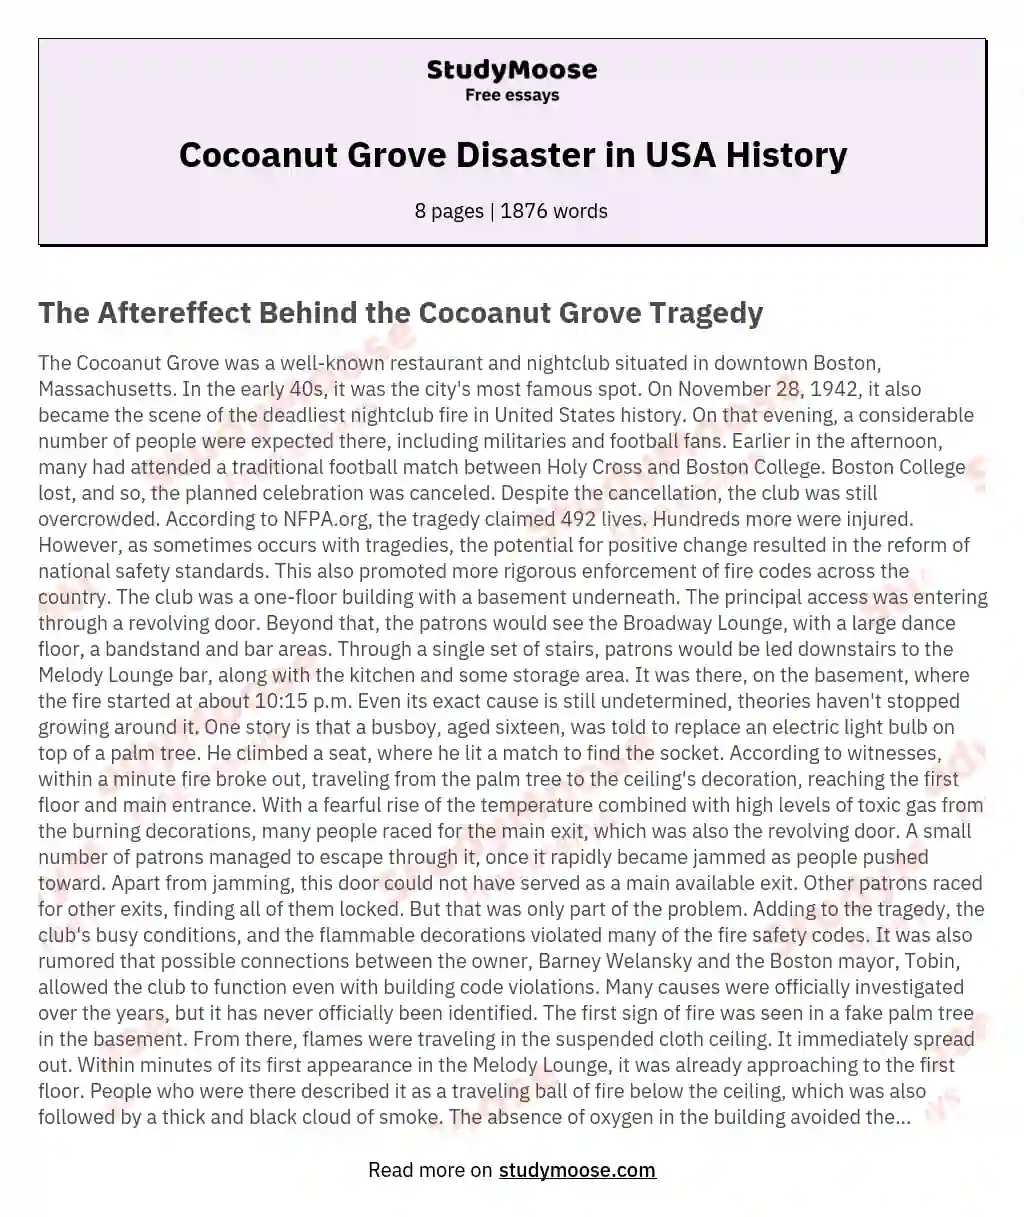 Cocoanut Grove Disaster in USA History essay